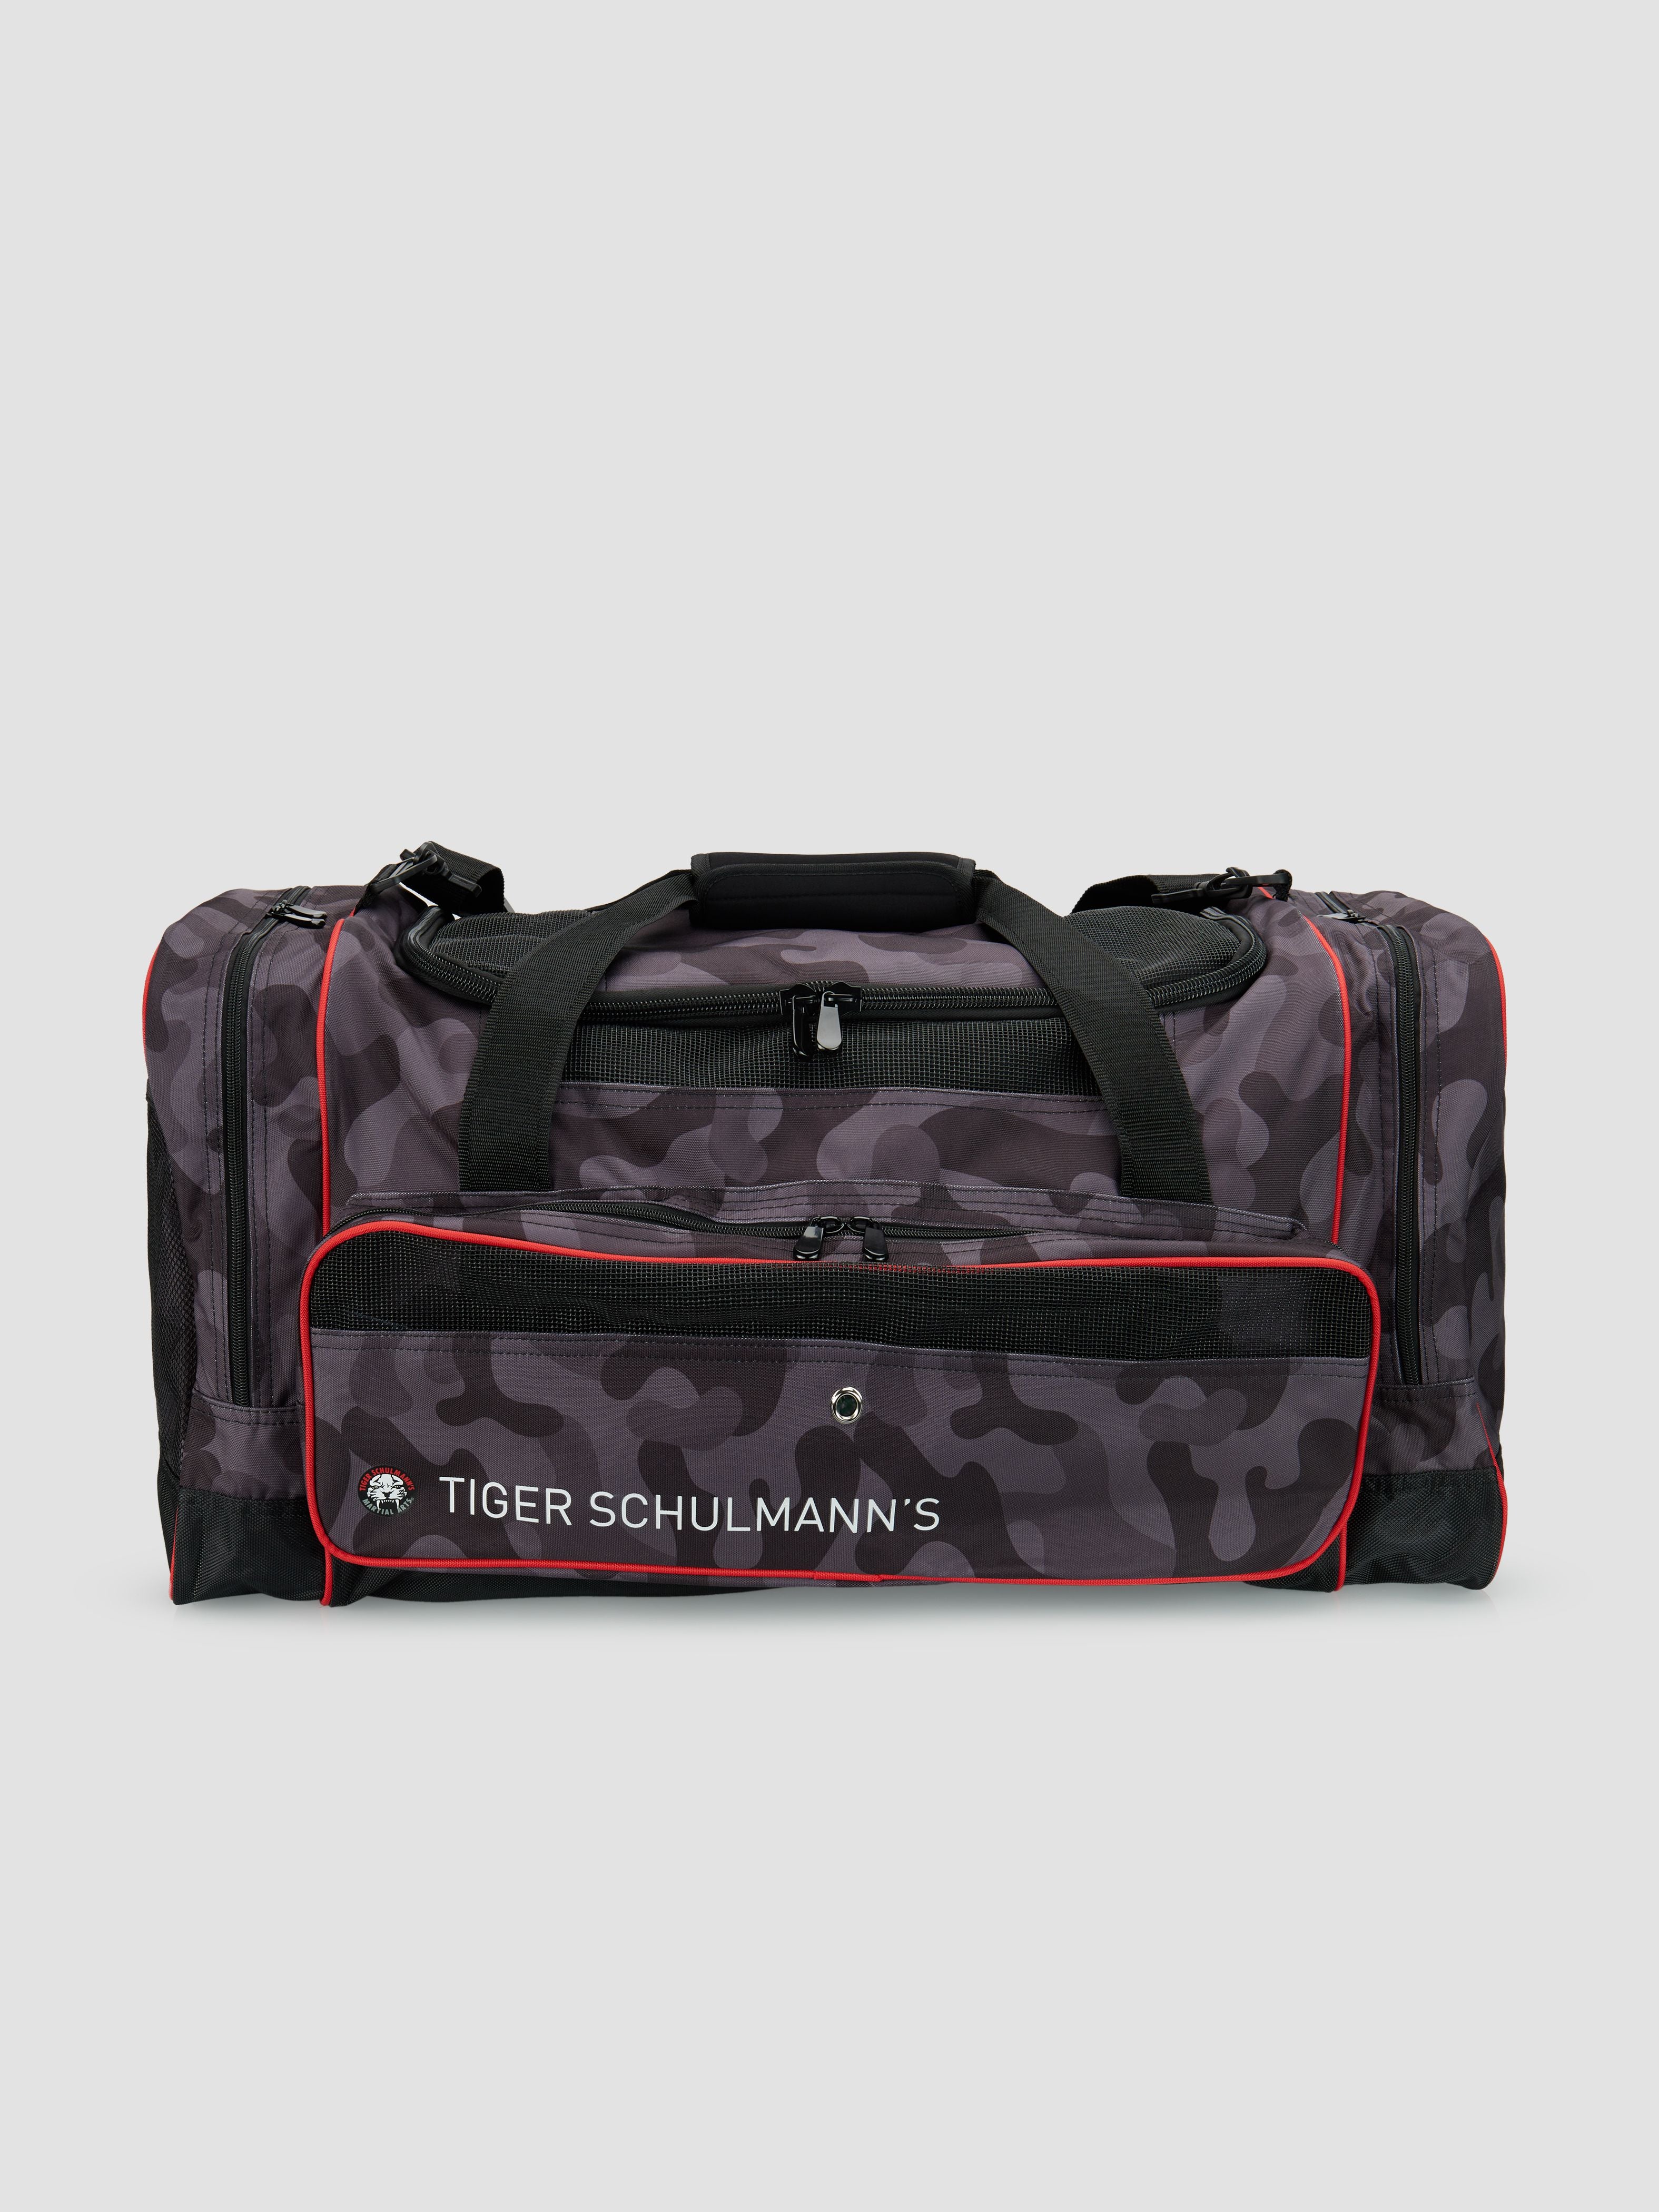 Used Supreme Tiger Camo Duffle Bag - $438 Used Supreme Duffle Bag - Dark  Aqua/Grey $218